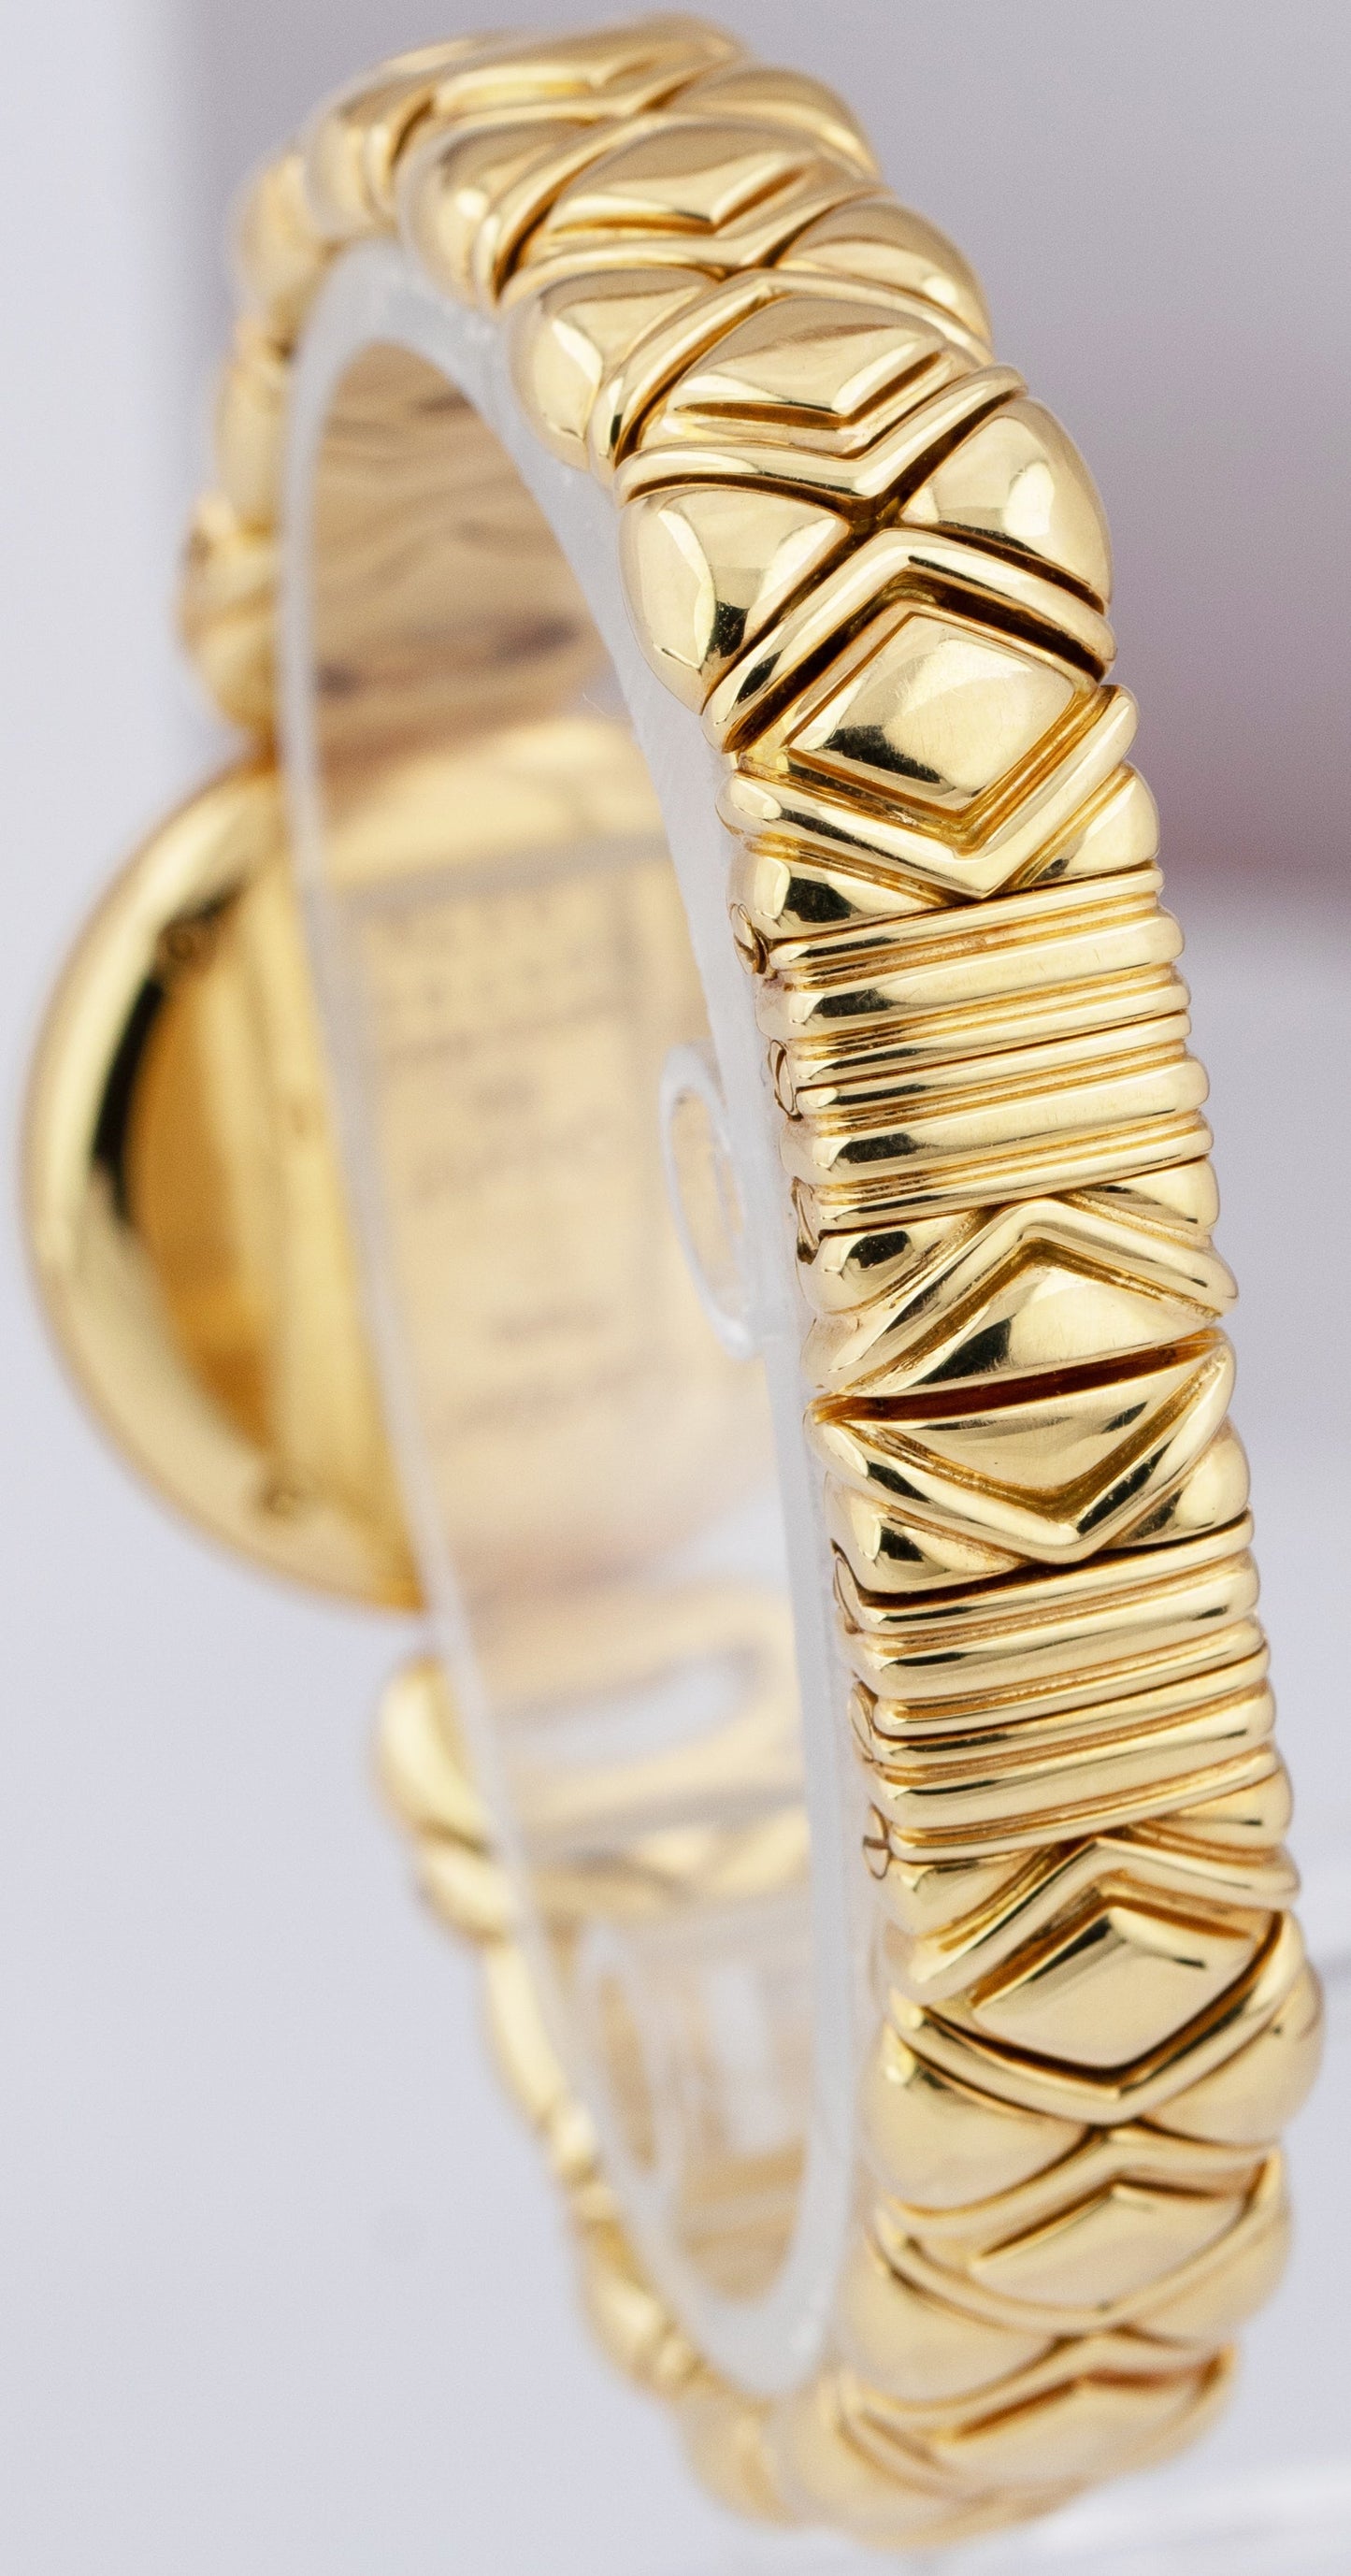 Ladies Cartier Colisee White Roman 24mm 18K Yellow Gold Quartz Watch 8057922